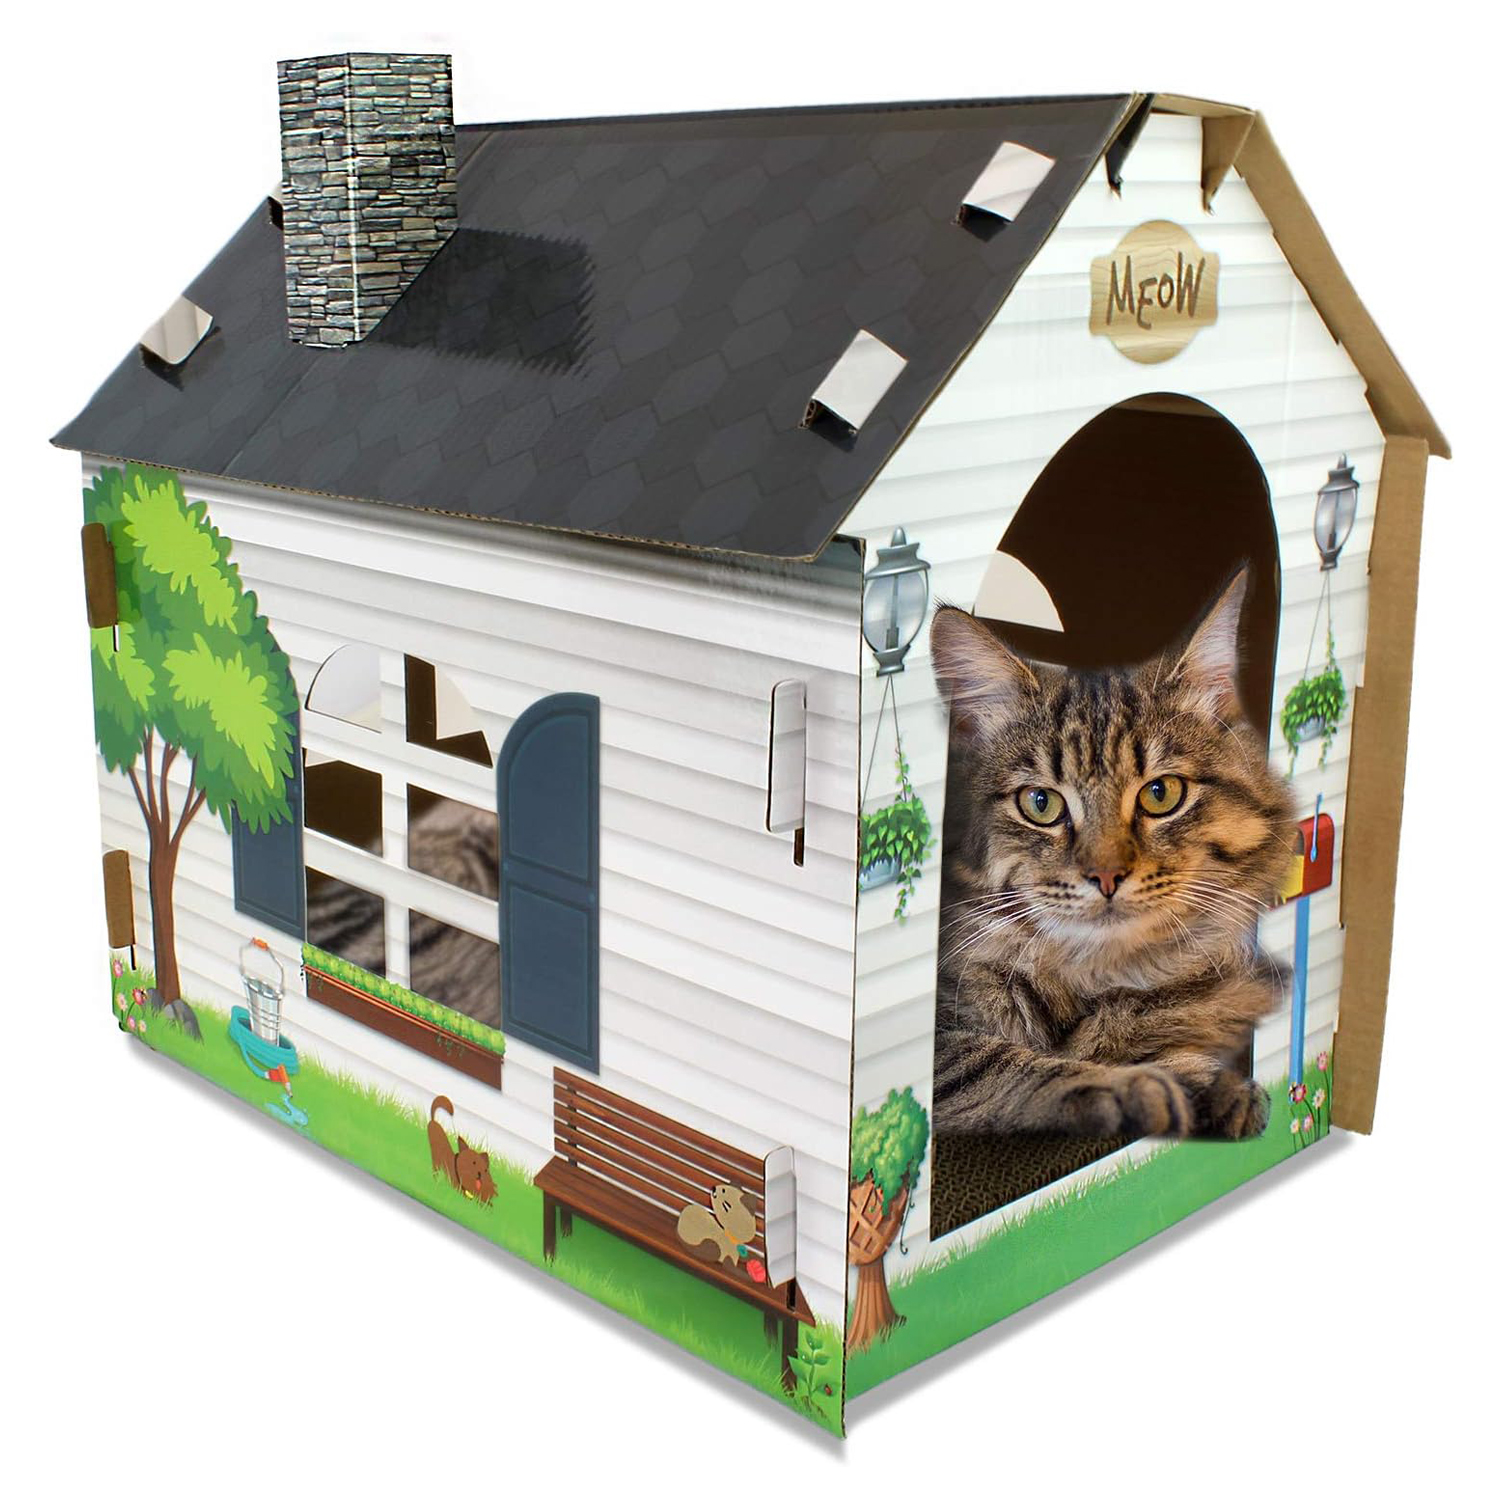 ASPCA Cardboard Cat House Hideaway Playhouse with Cat Scratcher